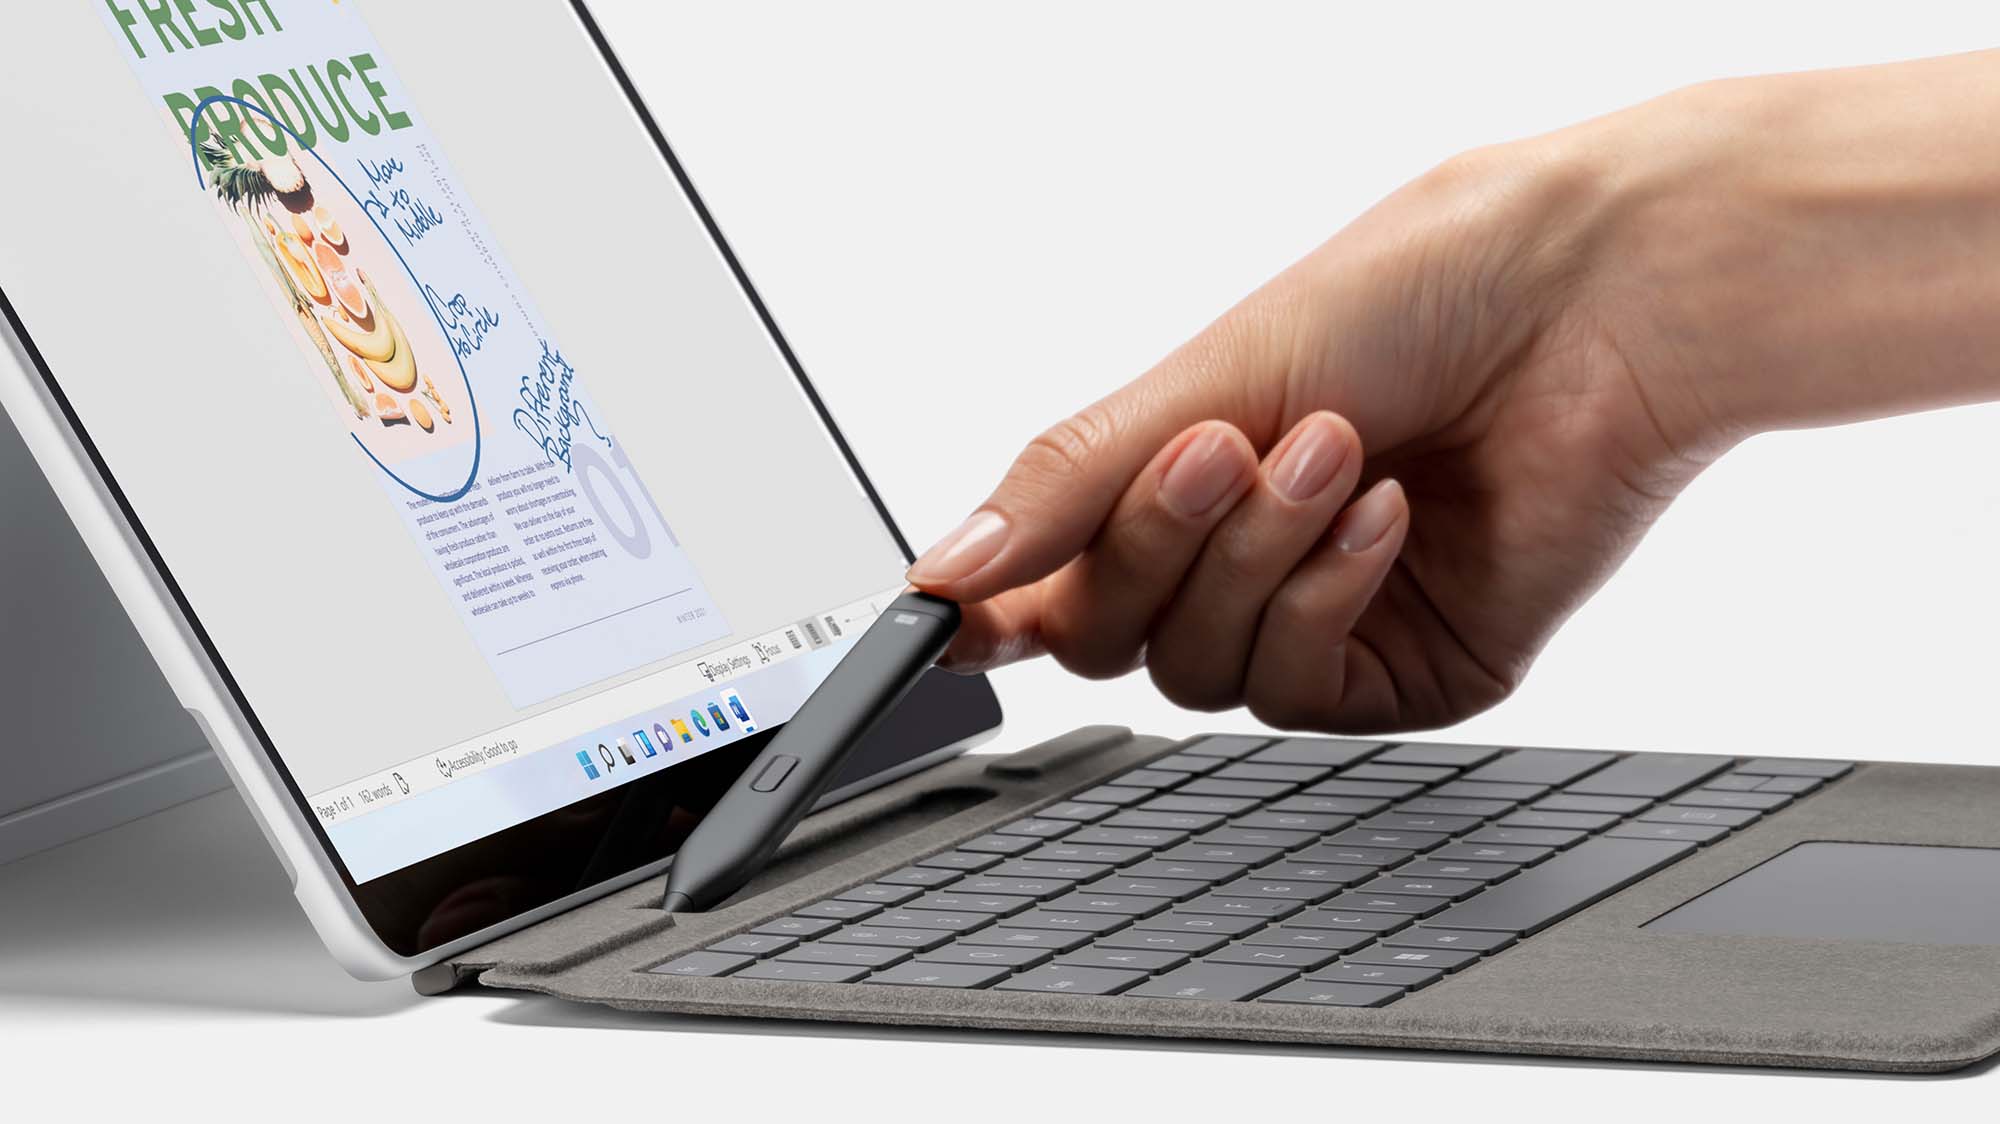 Surface Pro 8 